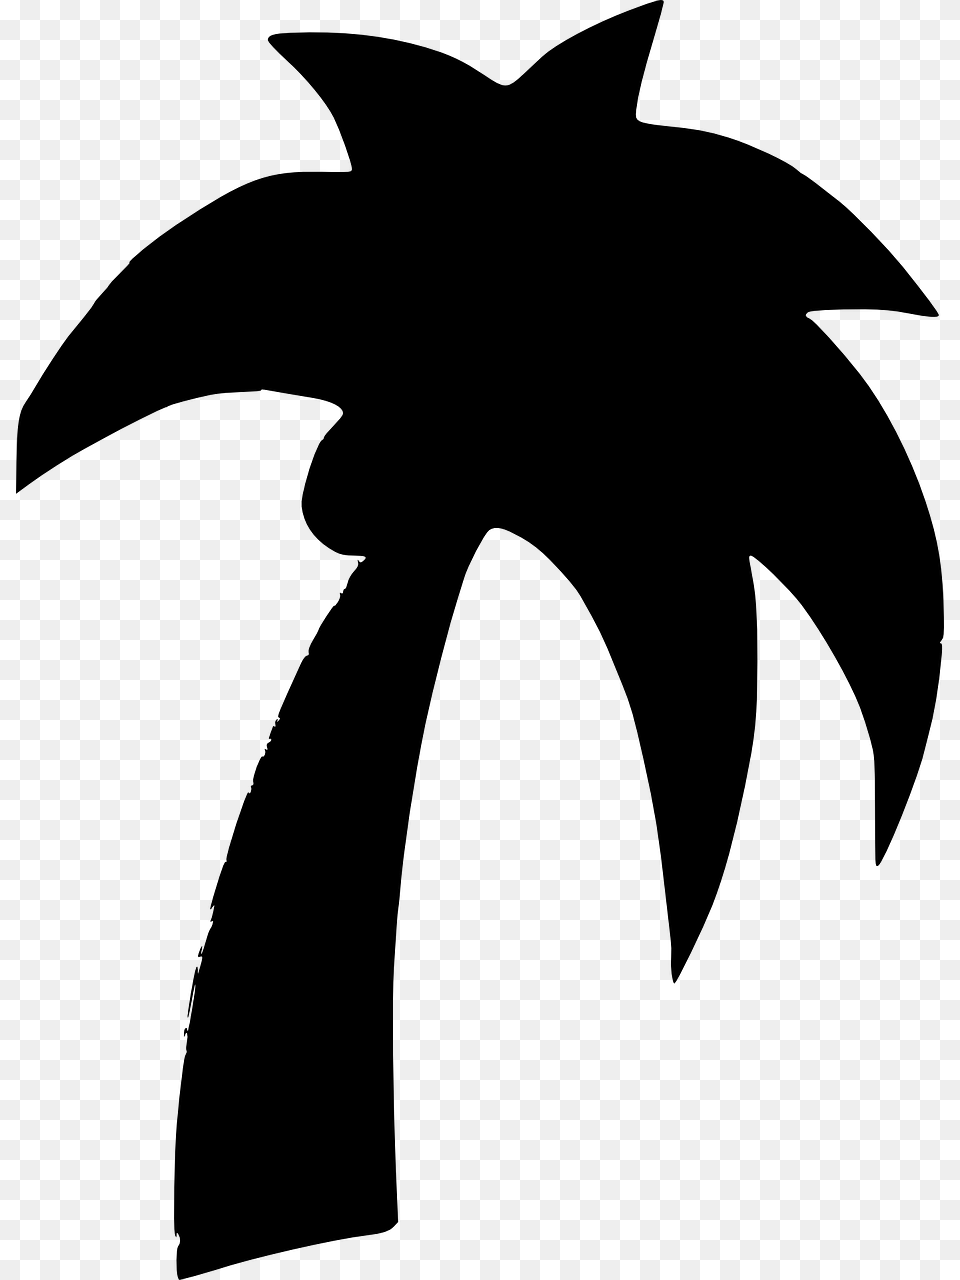 Shapes Clipart Vector Clip Art Online Royalty Palm Tree Clip Art Black, Gray Png